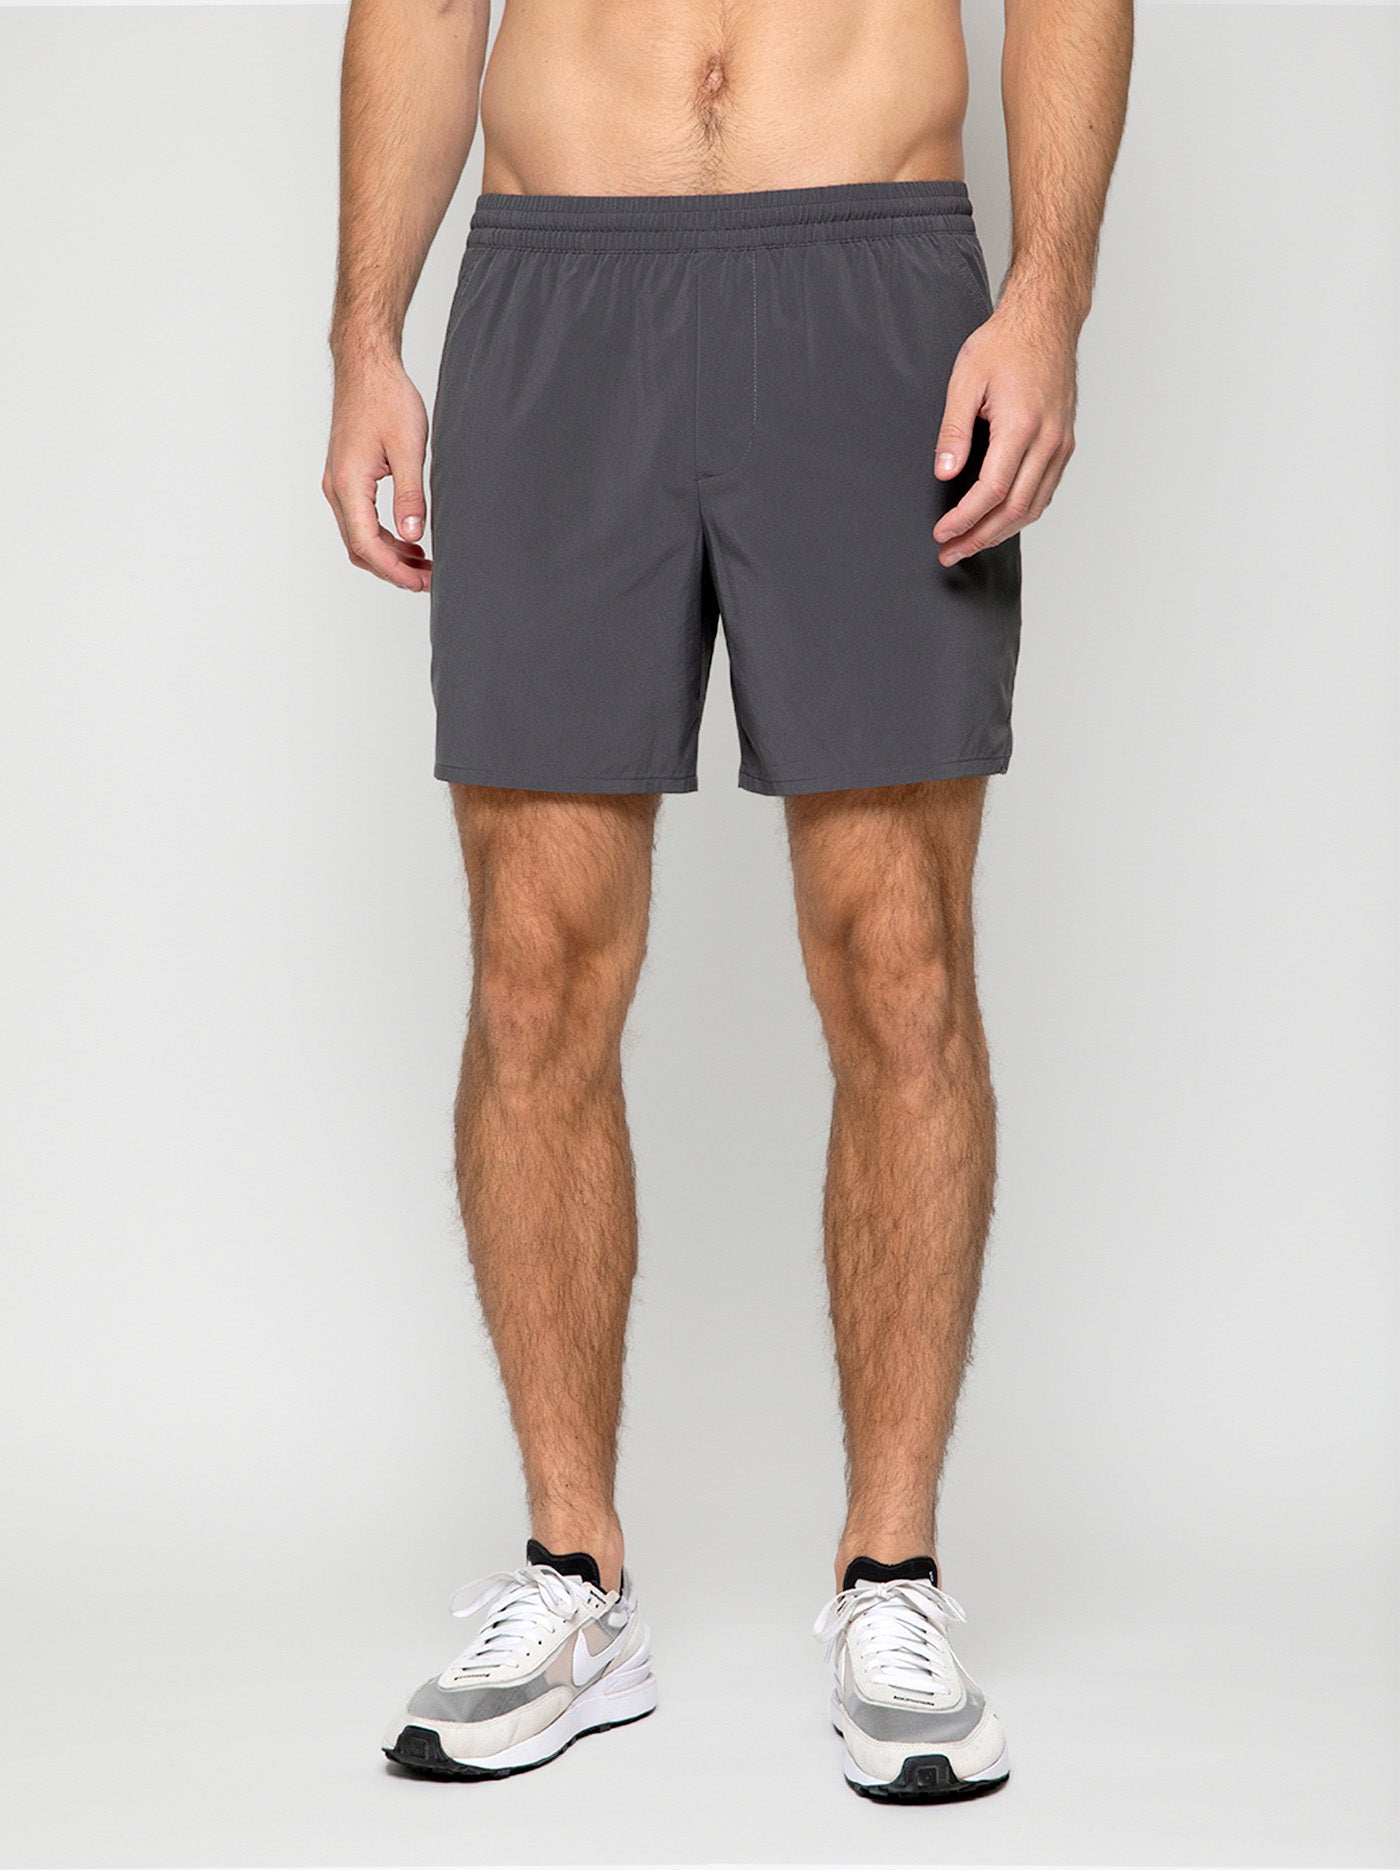 Slim Ultimate Shorts - 6-inch inseam